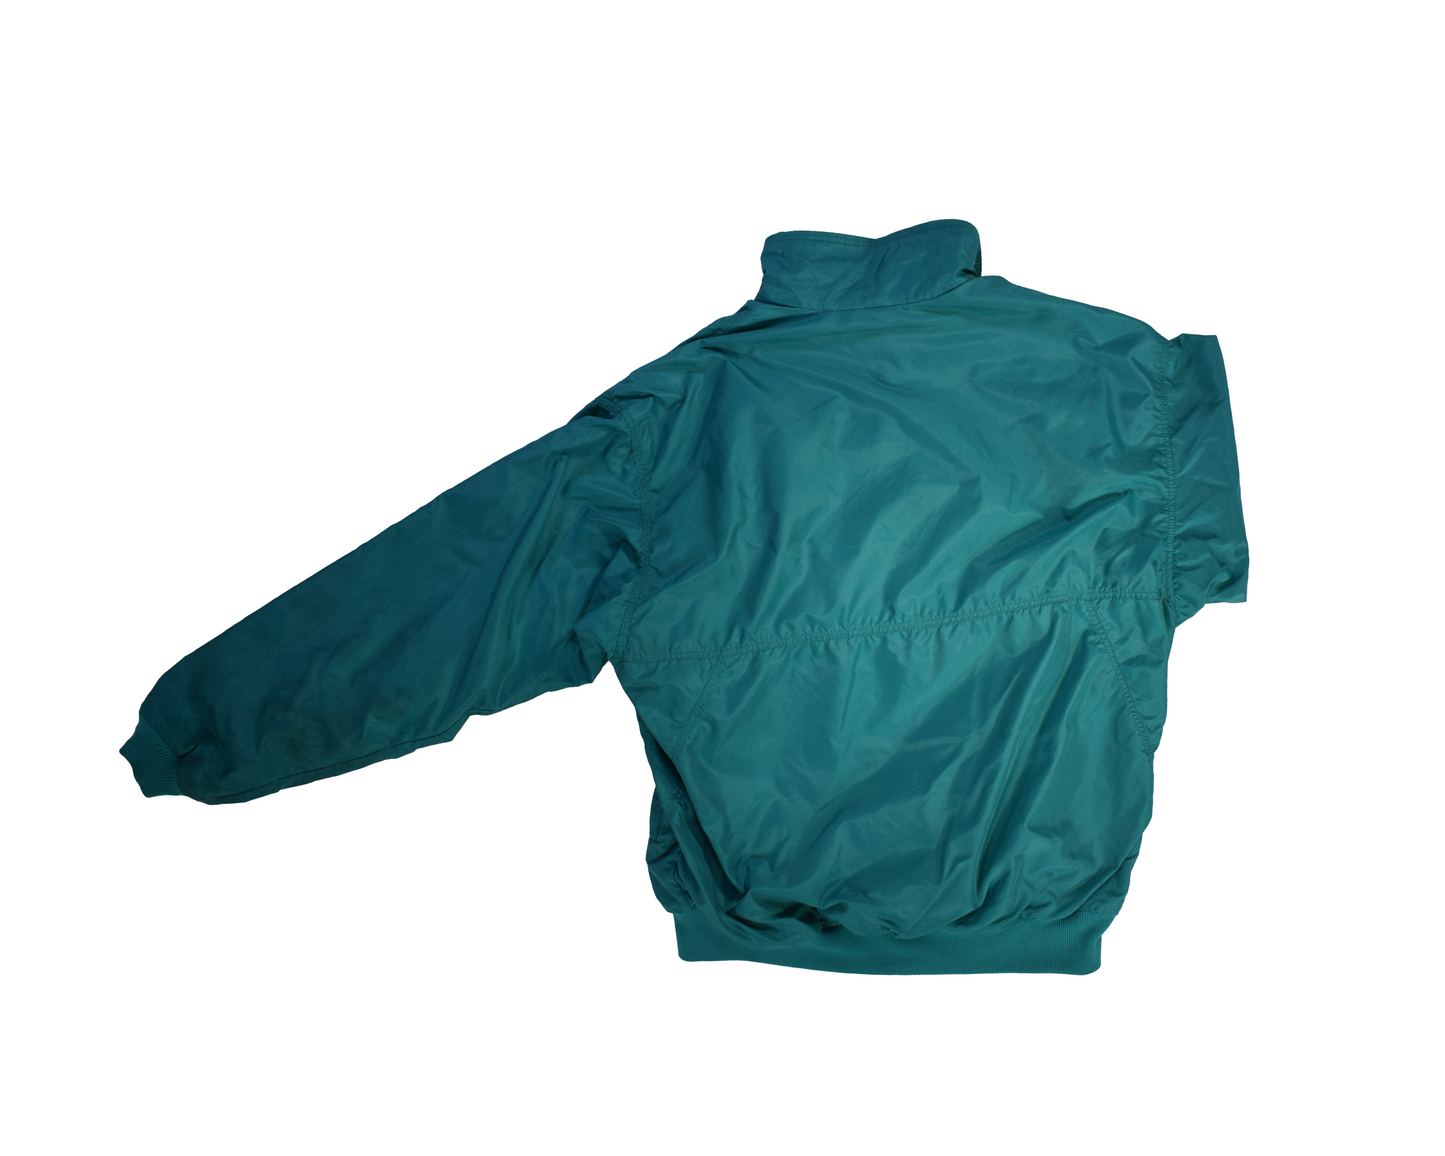 Vintage Turquoise Patagonia Jacket